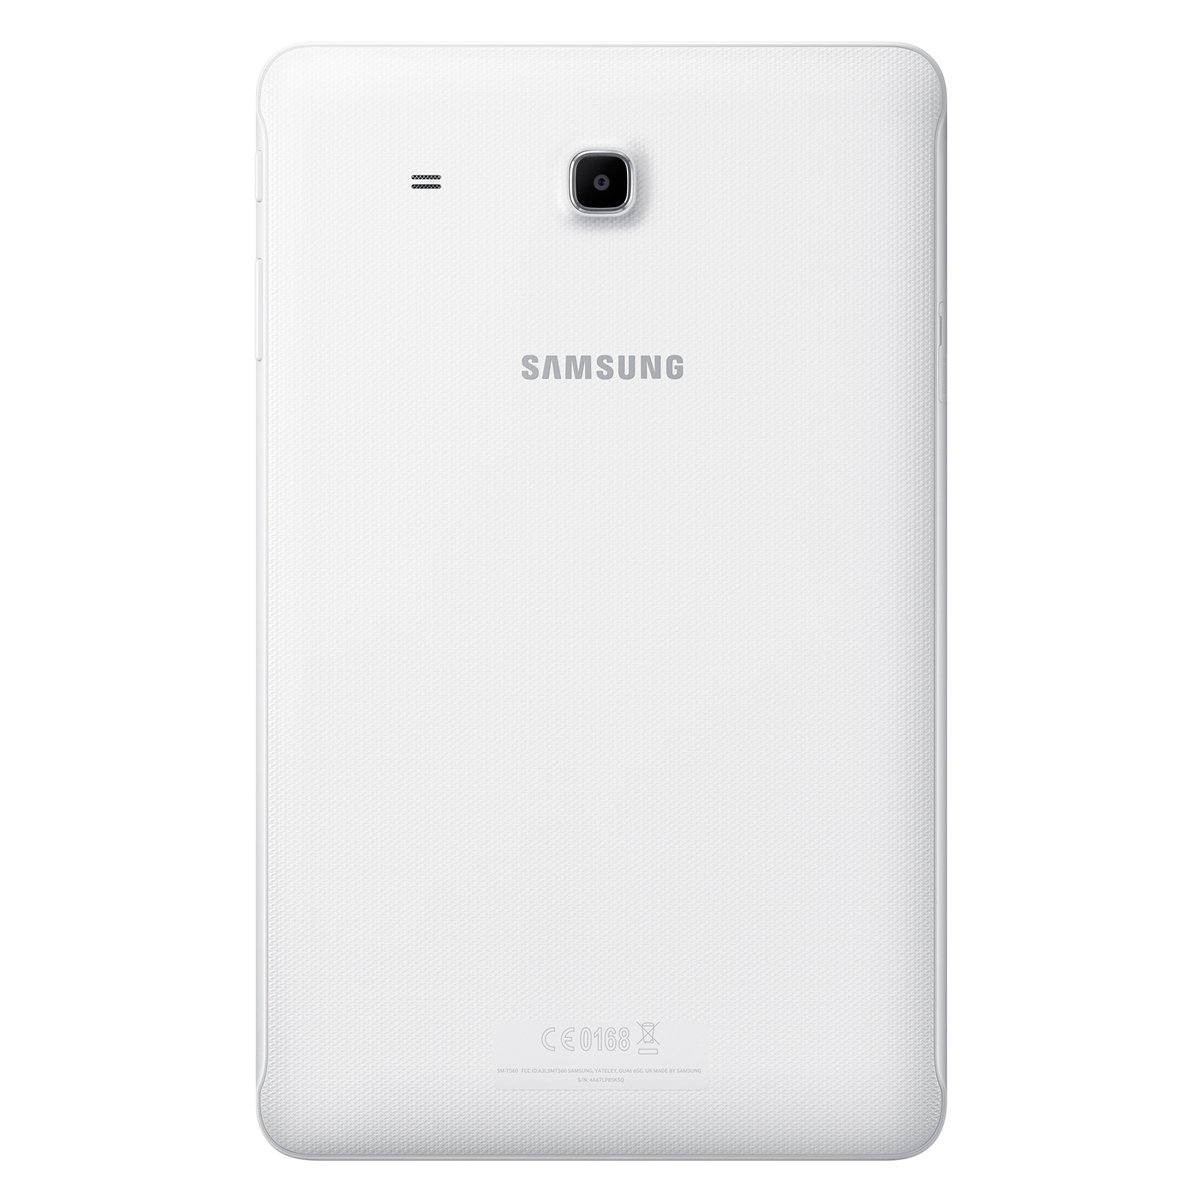 Tablet Samsung Galaxy Tab e 9.7" Blanca